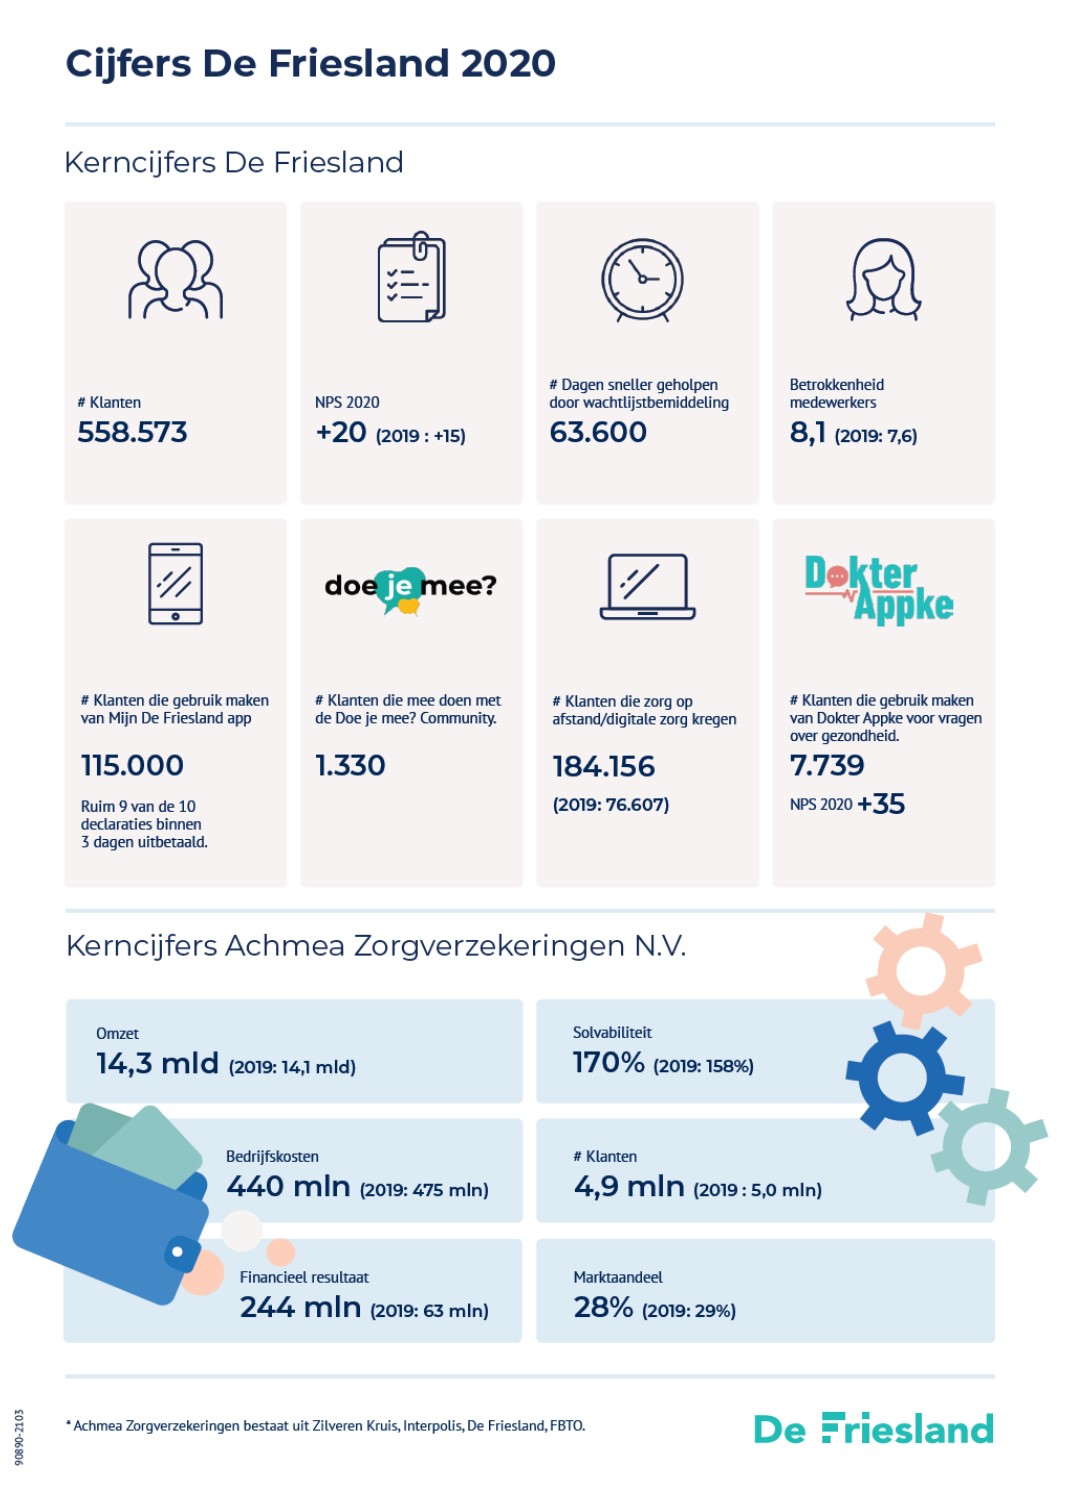 De Friesland Zorgverzekeraar 2021 Financiele Resultaten En Activiteiten De Friesland Zorgverzekeraar